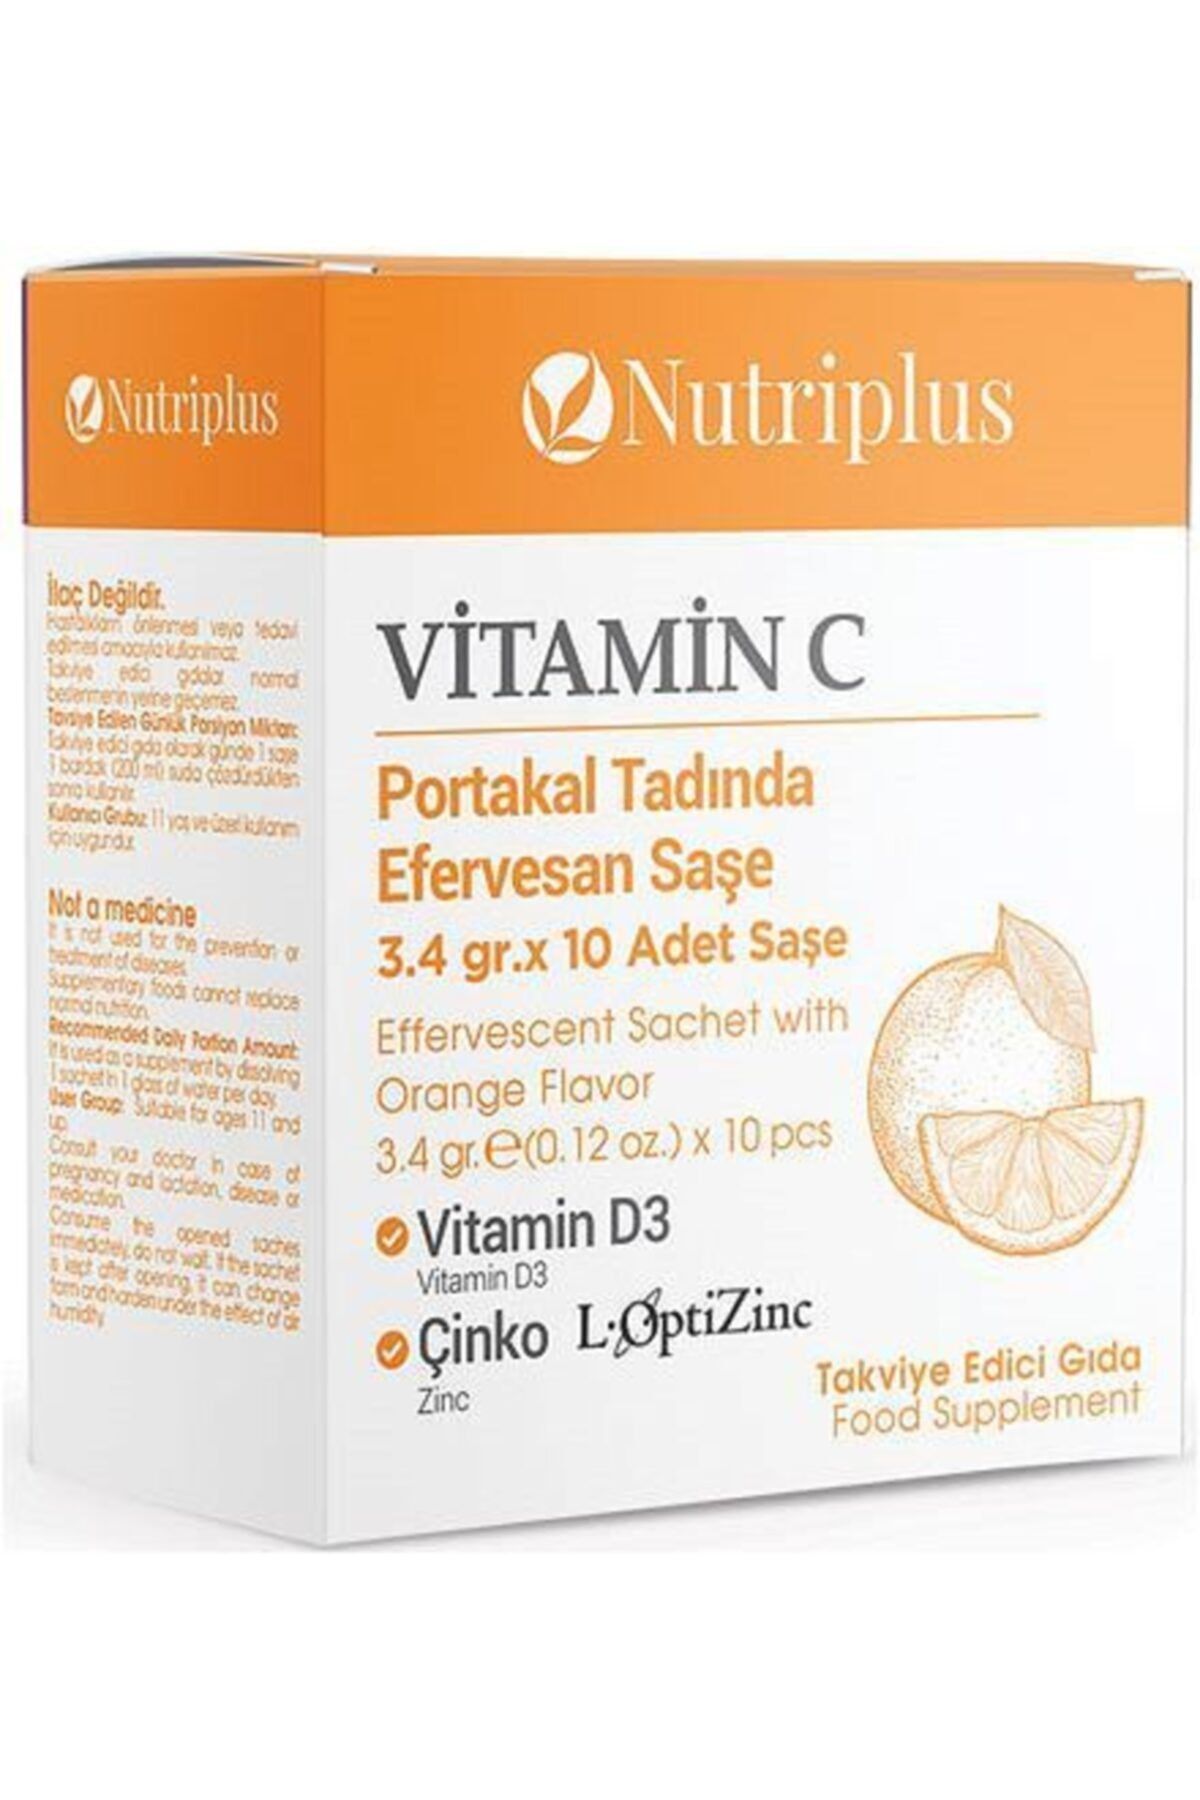 Farmasi Nutriplus Vitamin C Vitamin D3 Ve Çinko Içeren Efervesan